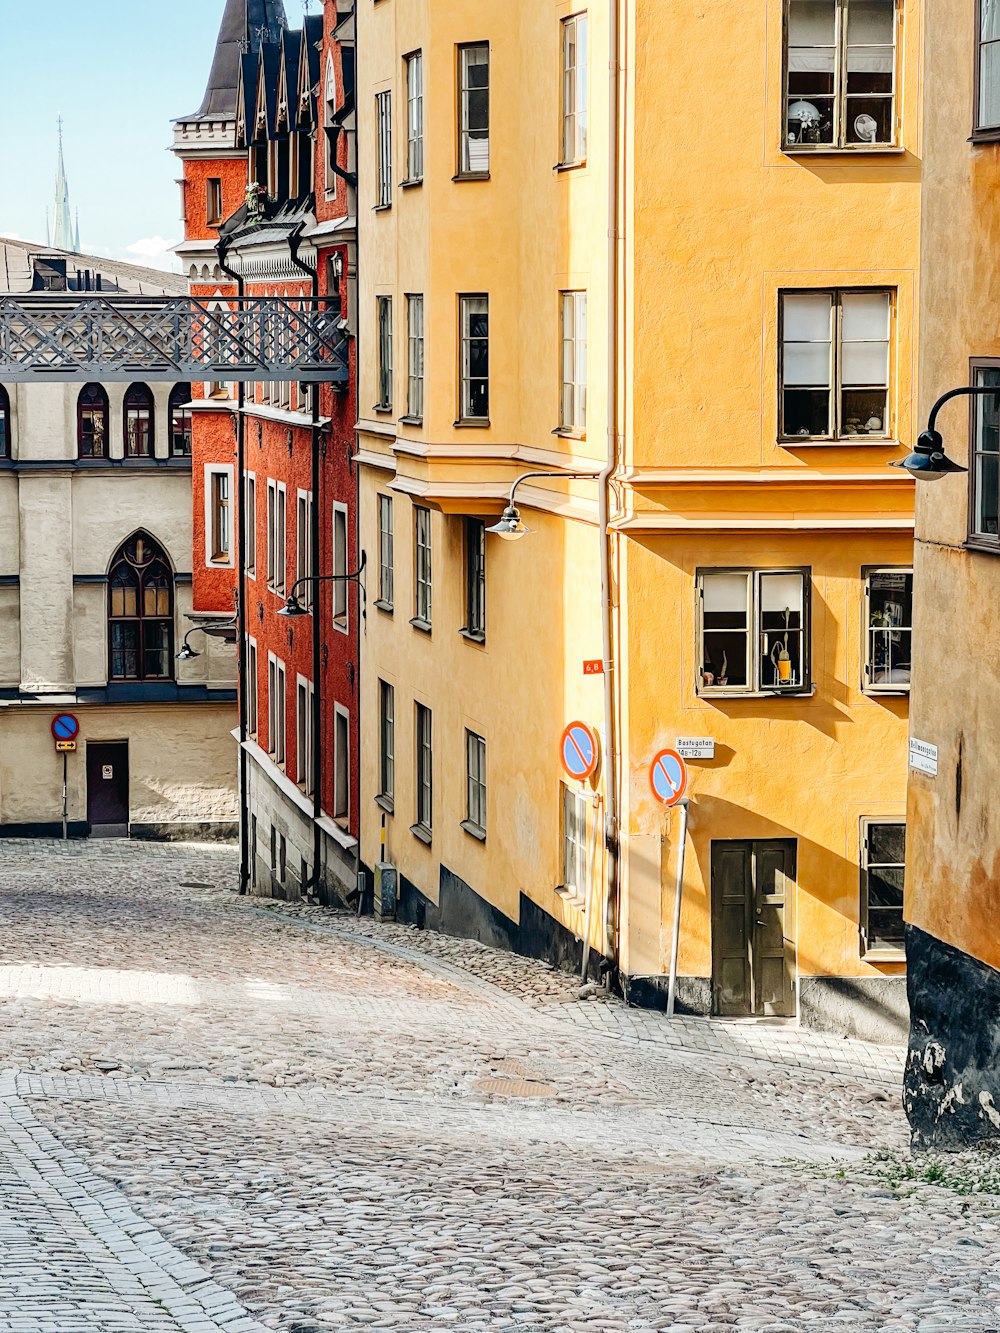 a cobblestone street in a european city